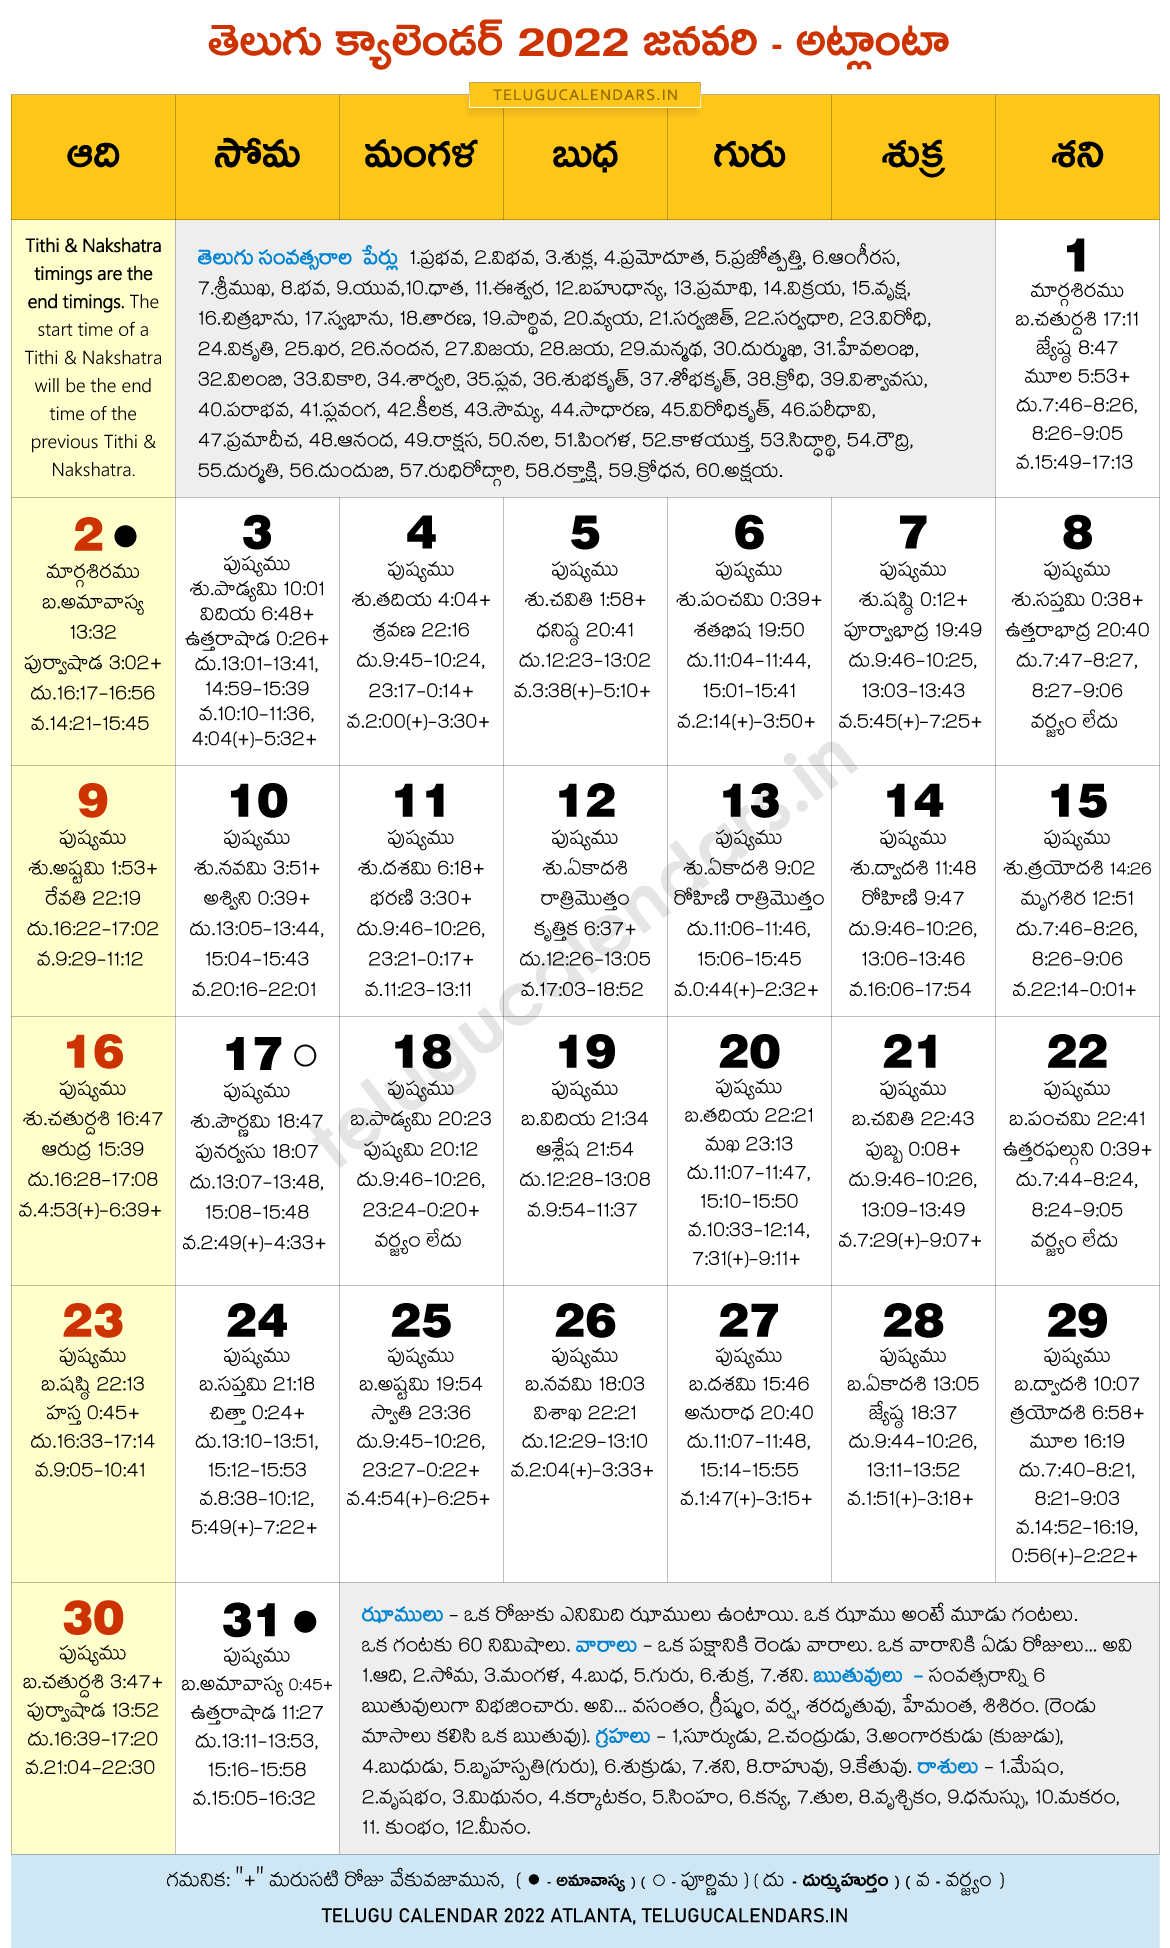 Atlanta Telugu Calendar 2022 - April 2022 Calendar  April Telugu Calendar 2022